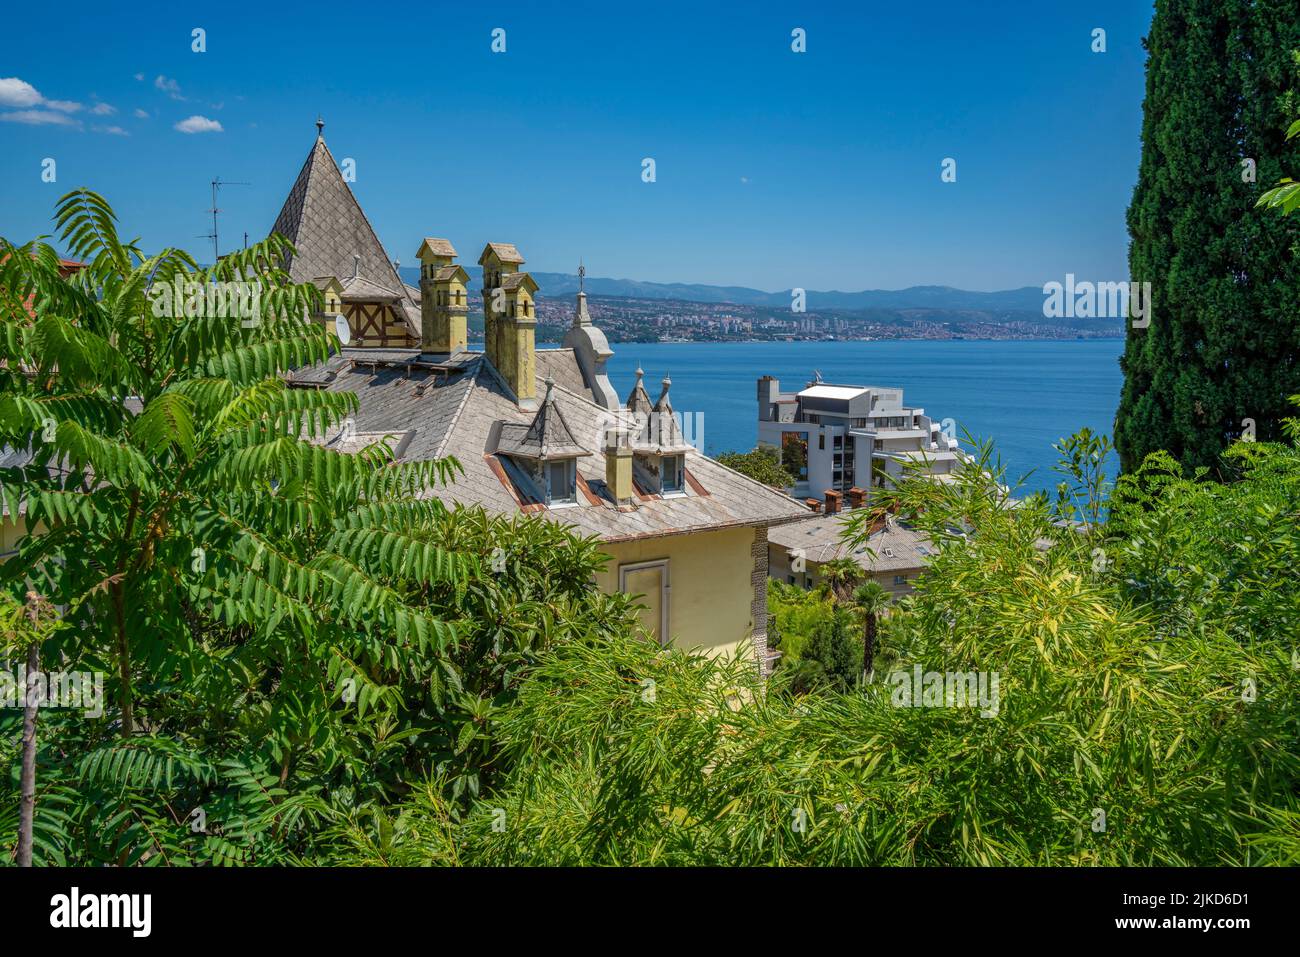 View of ornate buildings overlooking the town of Opatija, Kvarner Bay, Croatia, Europe Stock Photo